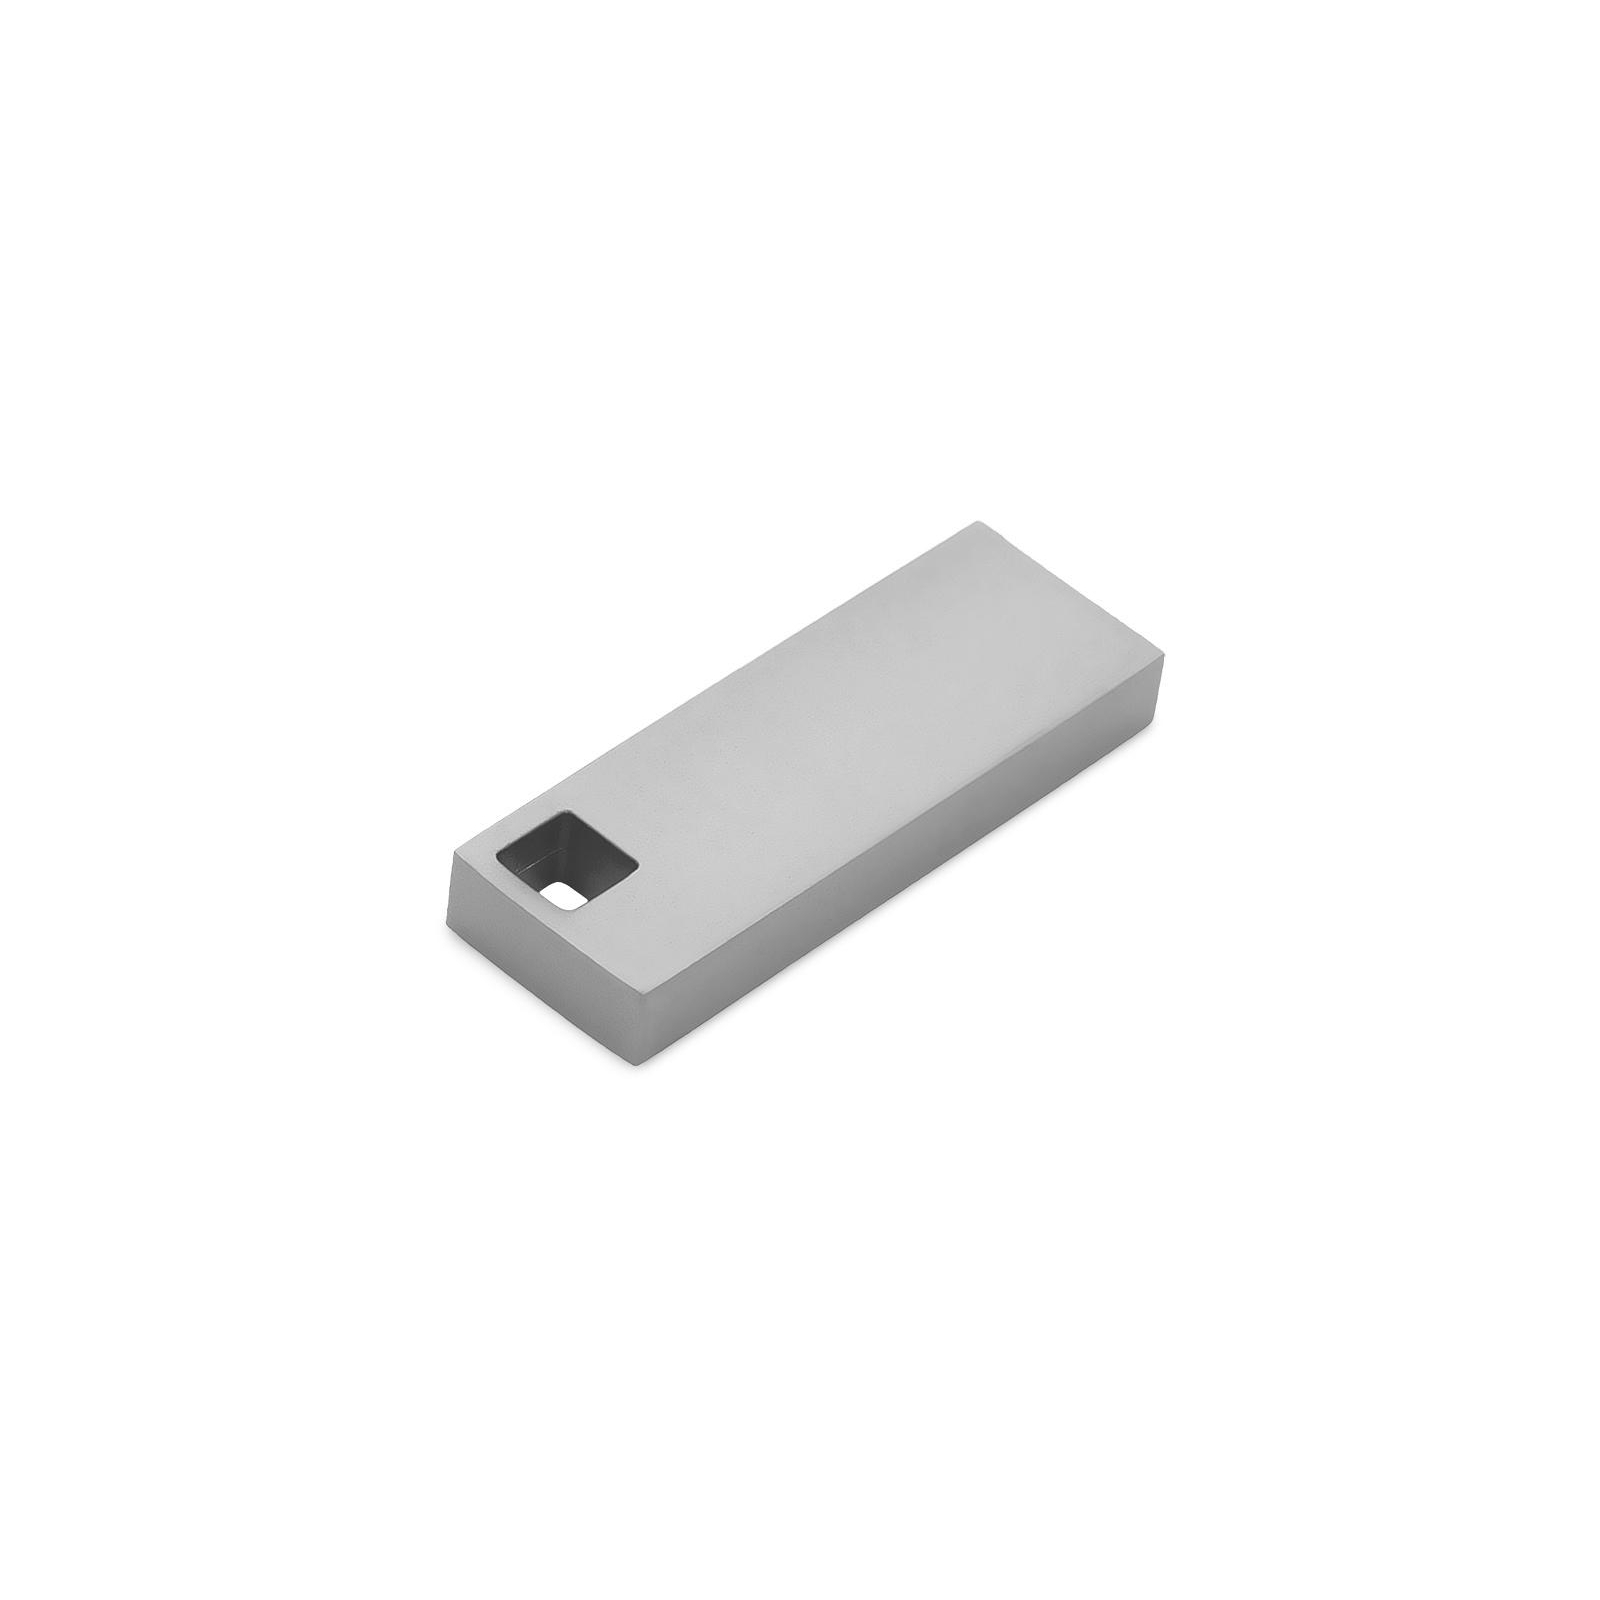 USB флеш накопитель eXceleram 16GB U1 Series Silver USB 3.1 Gen 1 (EXP2U3U1S16) изображение 3